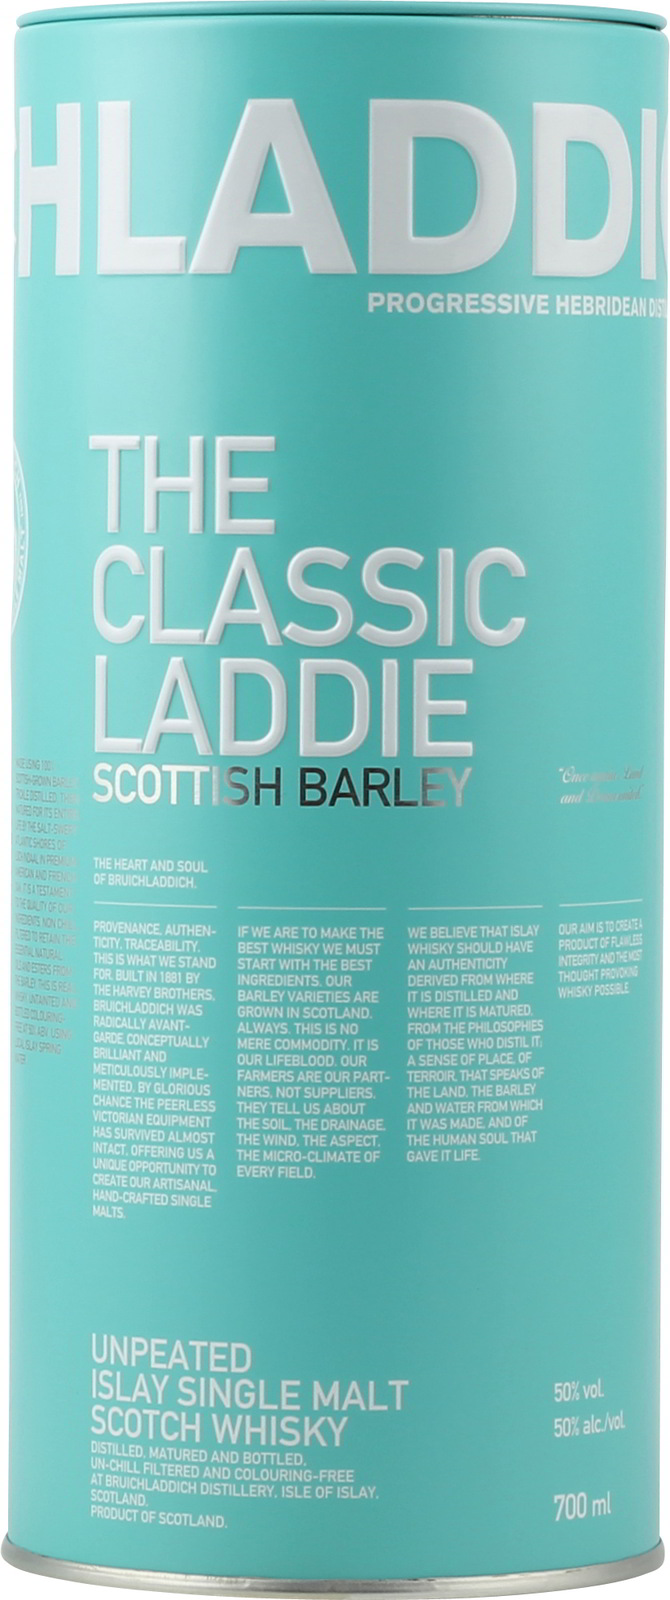 Bruichladdich The Classic Laddie Scottish Barley Islay | Whisky